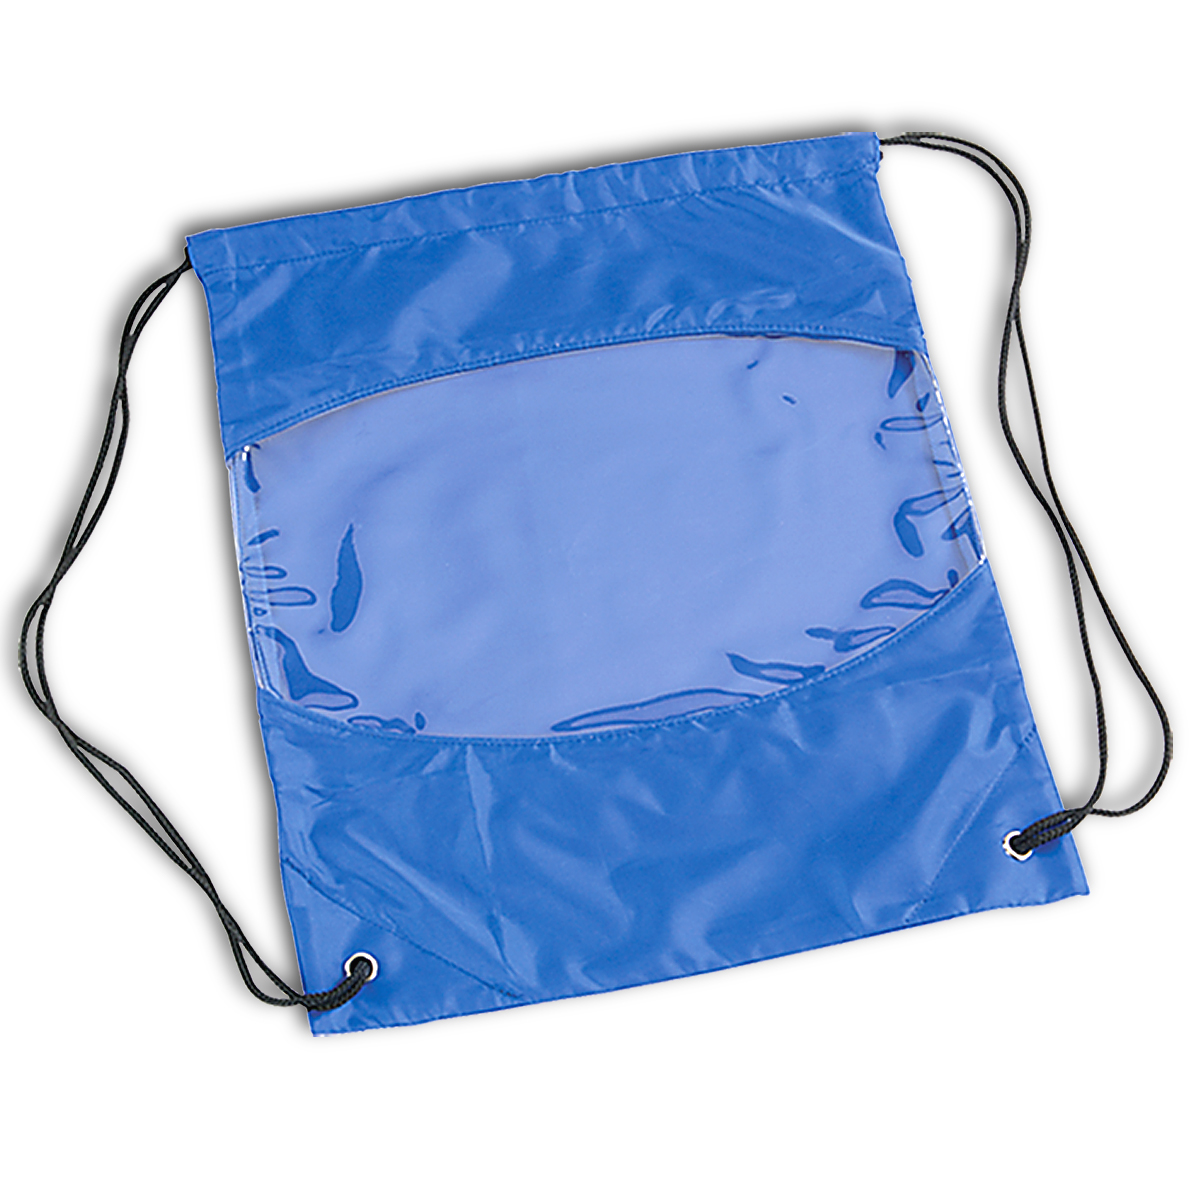 Clear-View Drawstring Bag